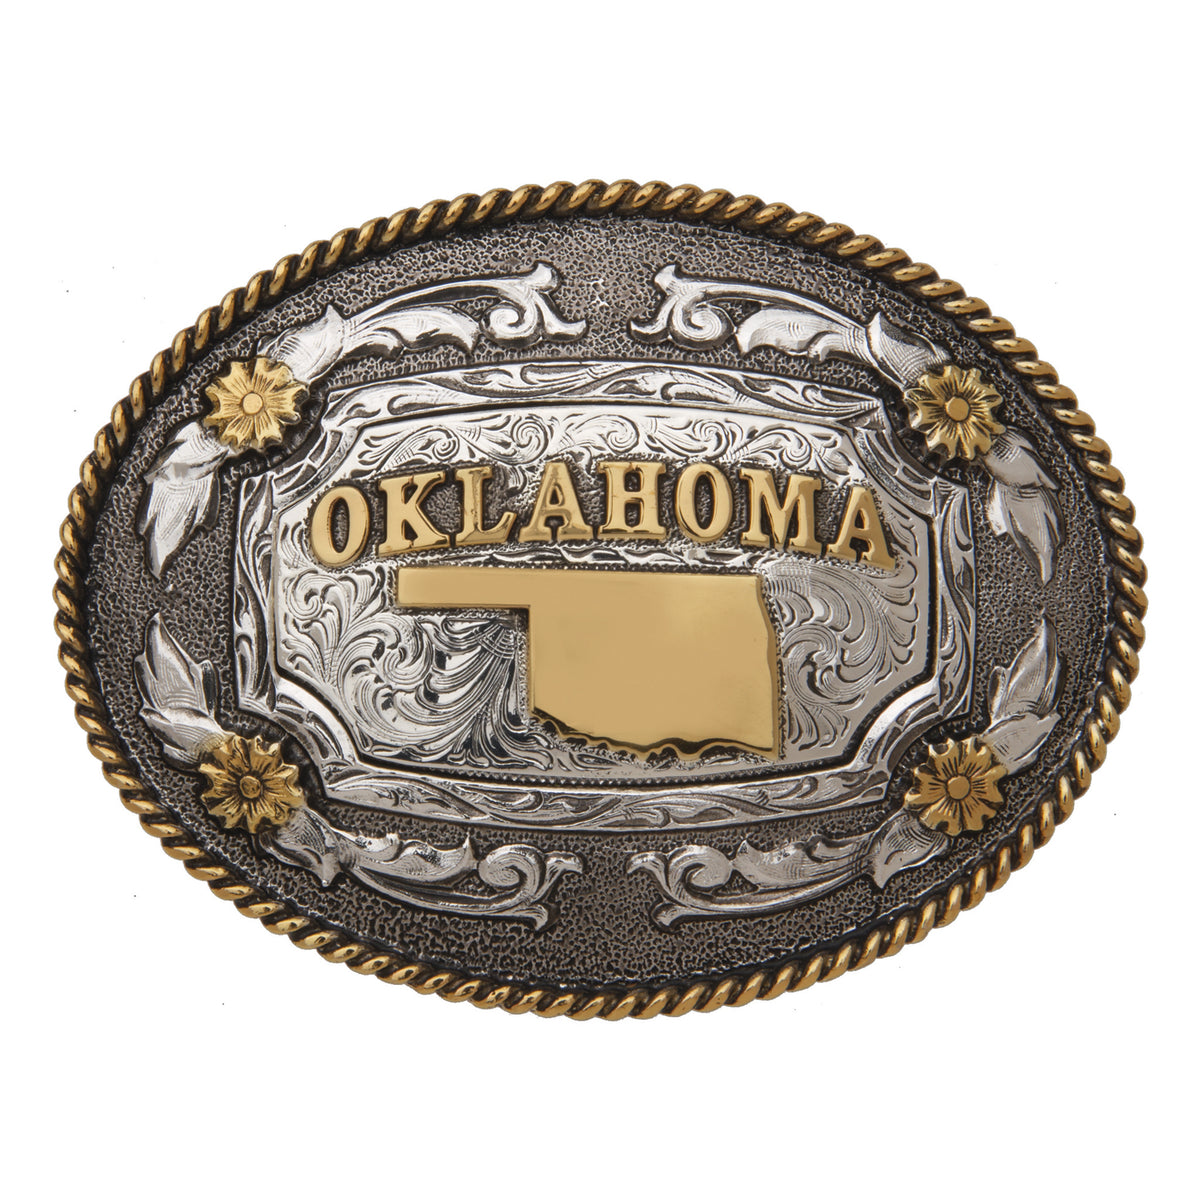 Oklahoma — Oval Rope Edge Buckle